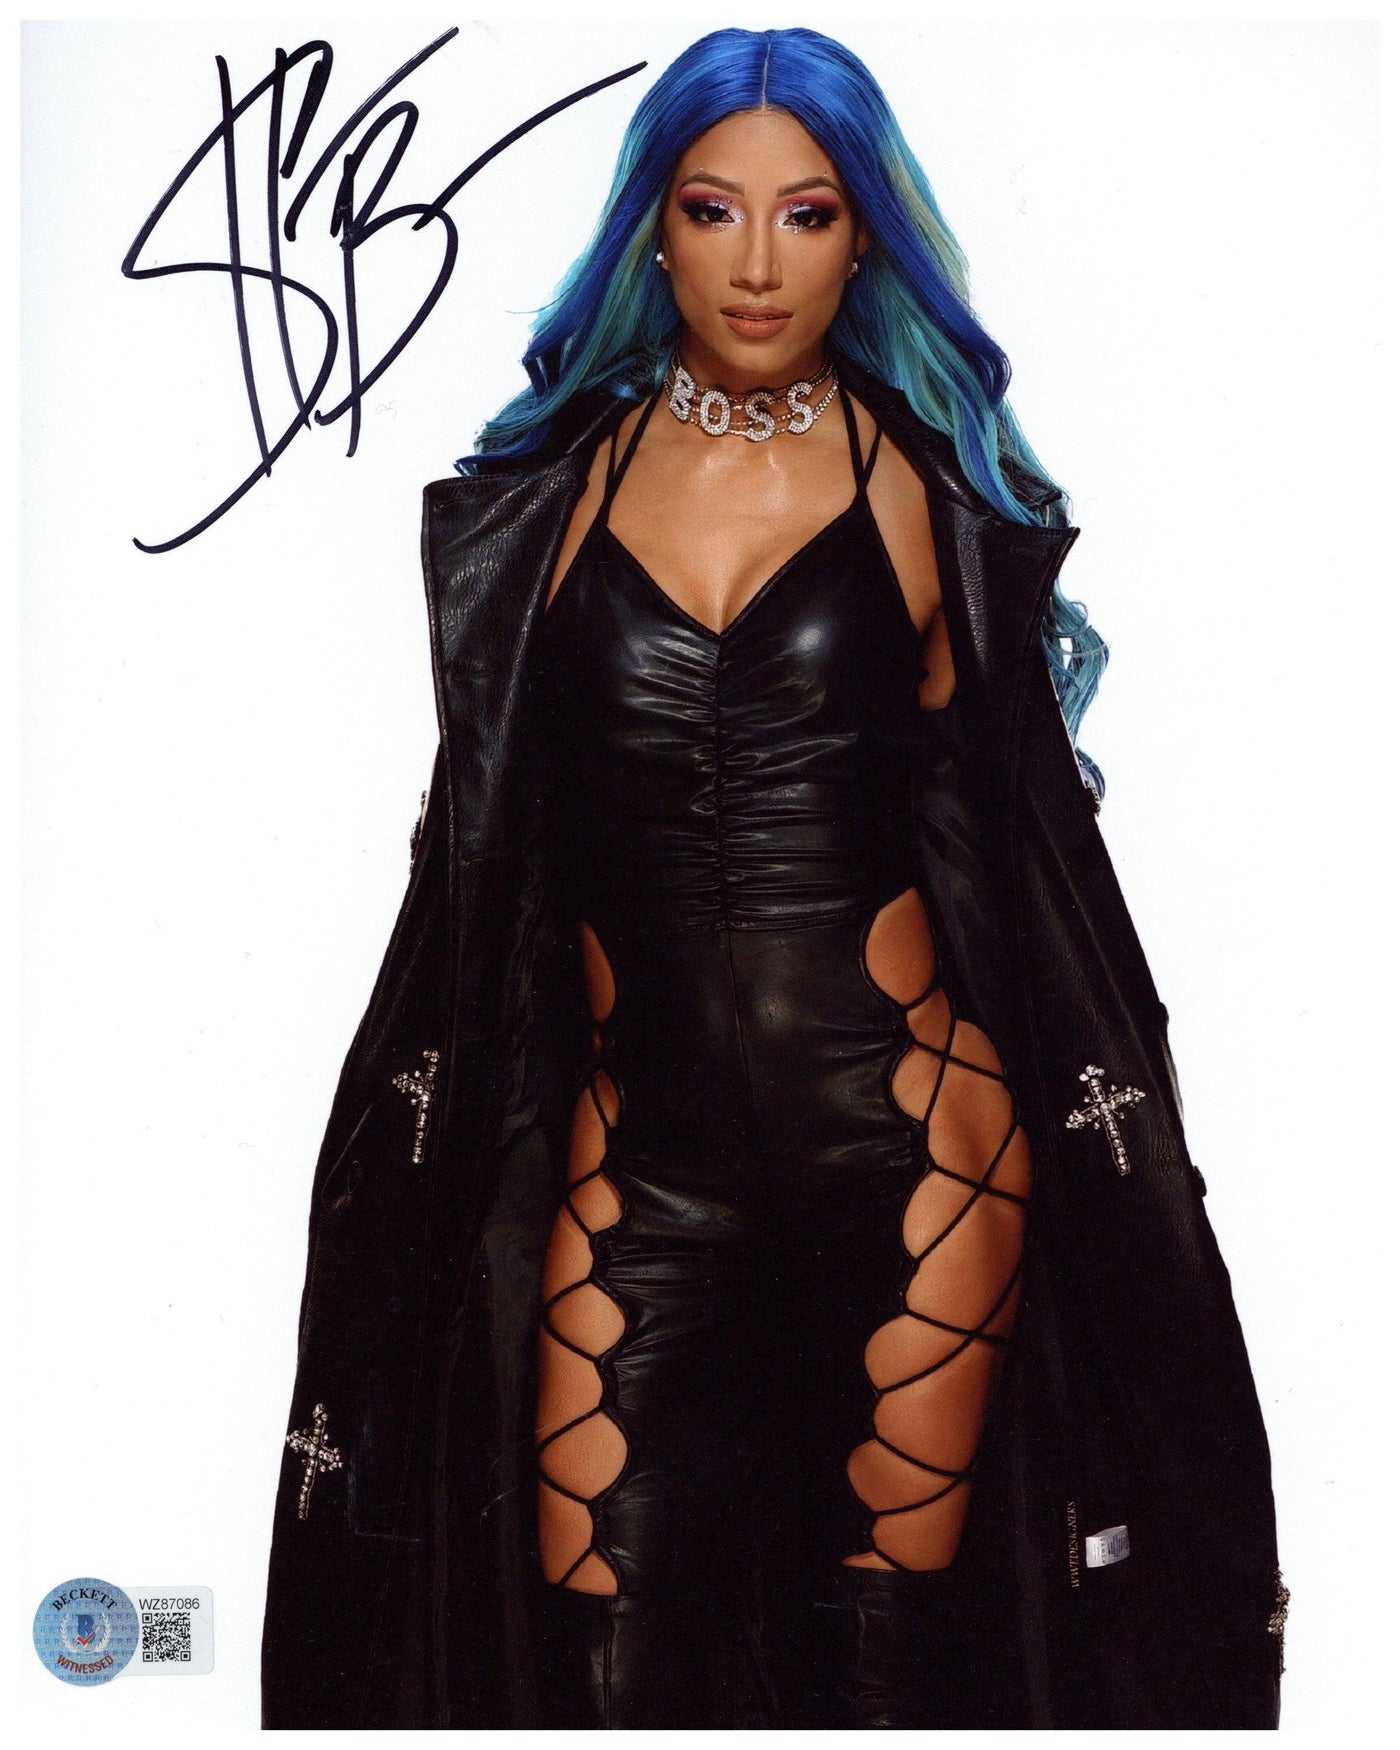 Sasha Banks Signed 8x10 Photo WWE Champion Autographed BAS COA Z5